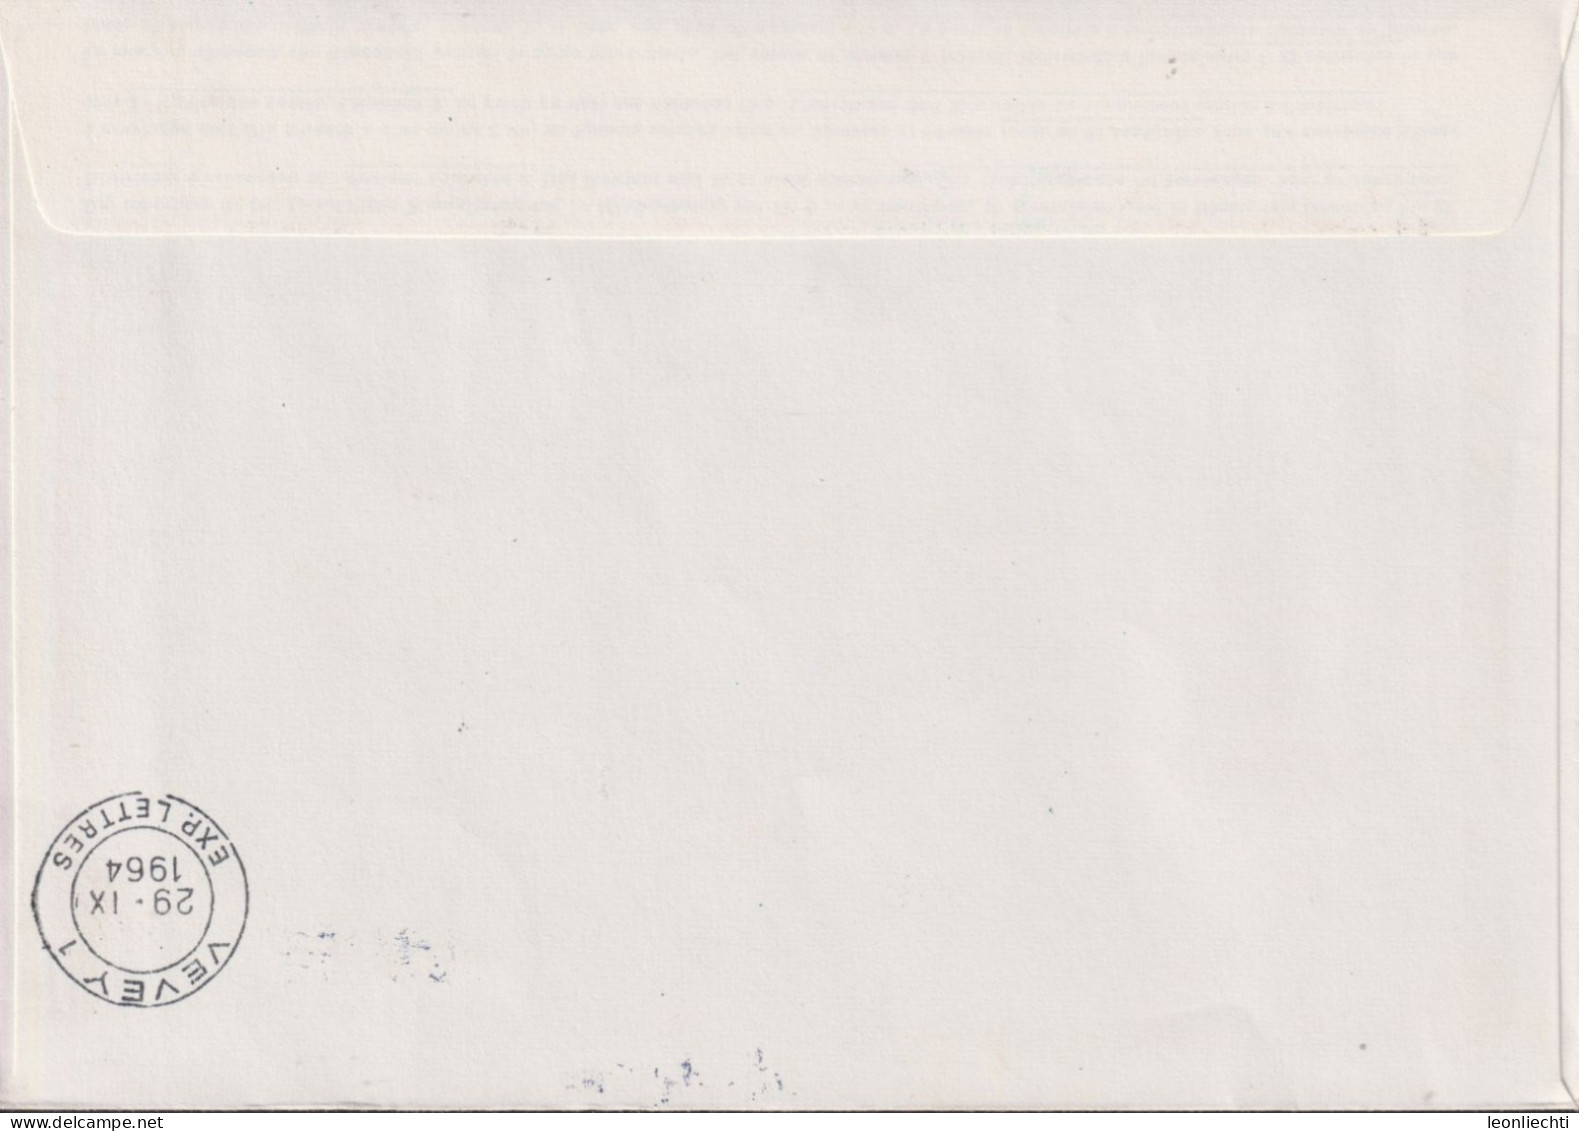 1964 Schweiz Brief ° Vol Postal Par Ballon Libre, Mehrfachfrankatur (Pro Juventute) - Montgolfières